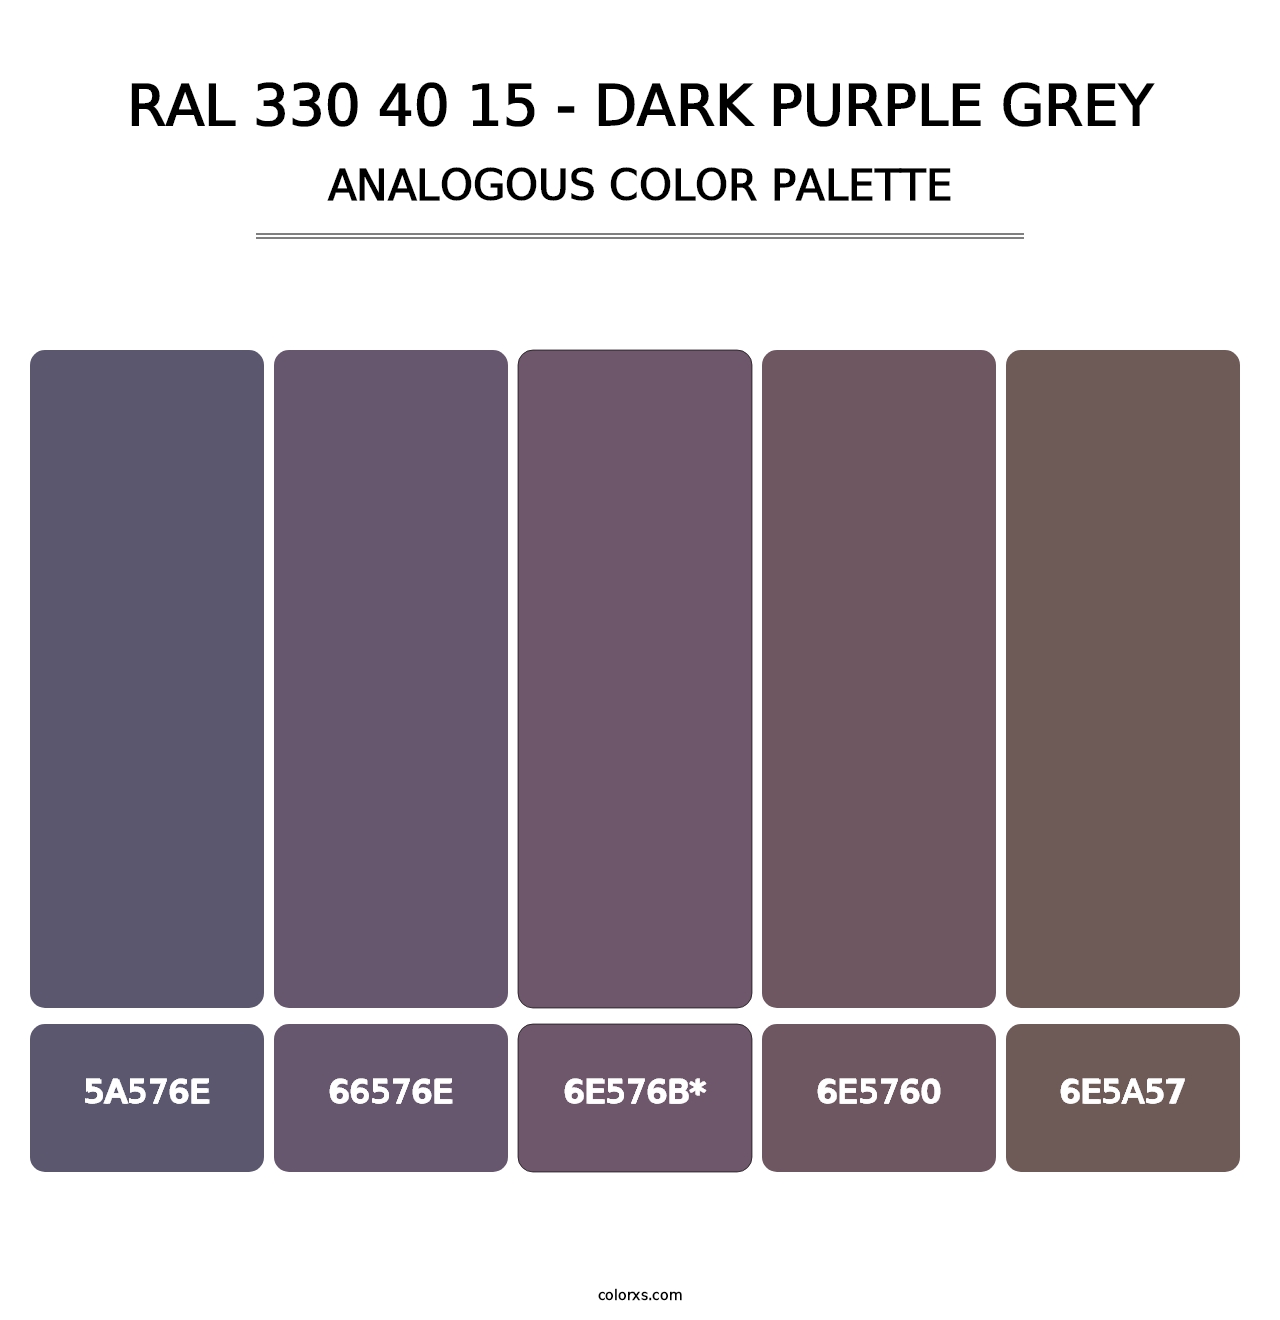 RAL 330 40 15 - Dark Purple Grey - Analogous Color Palette